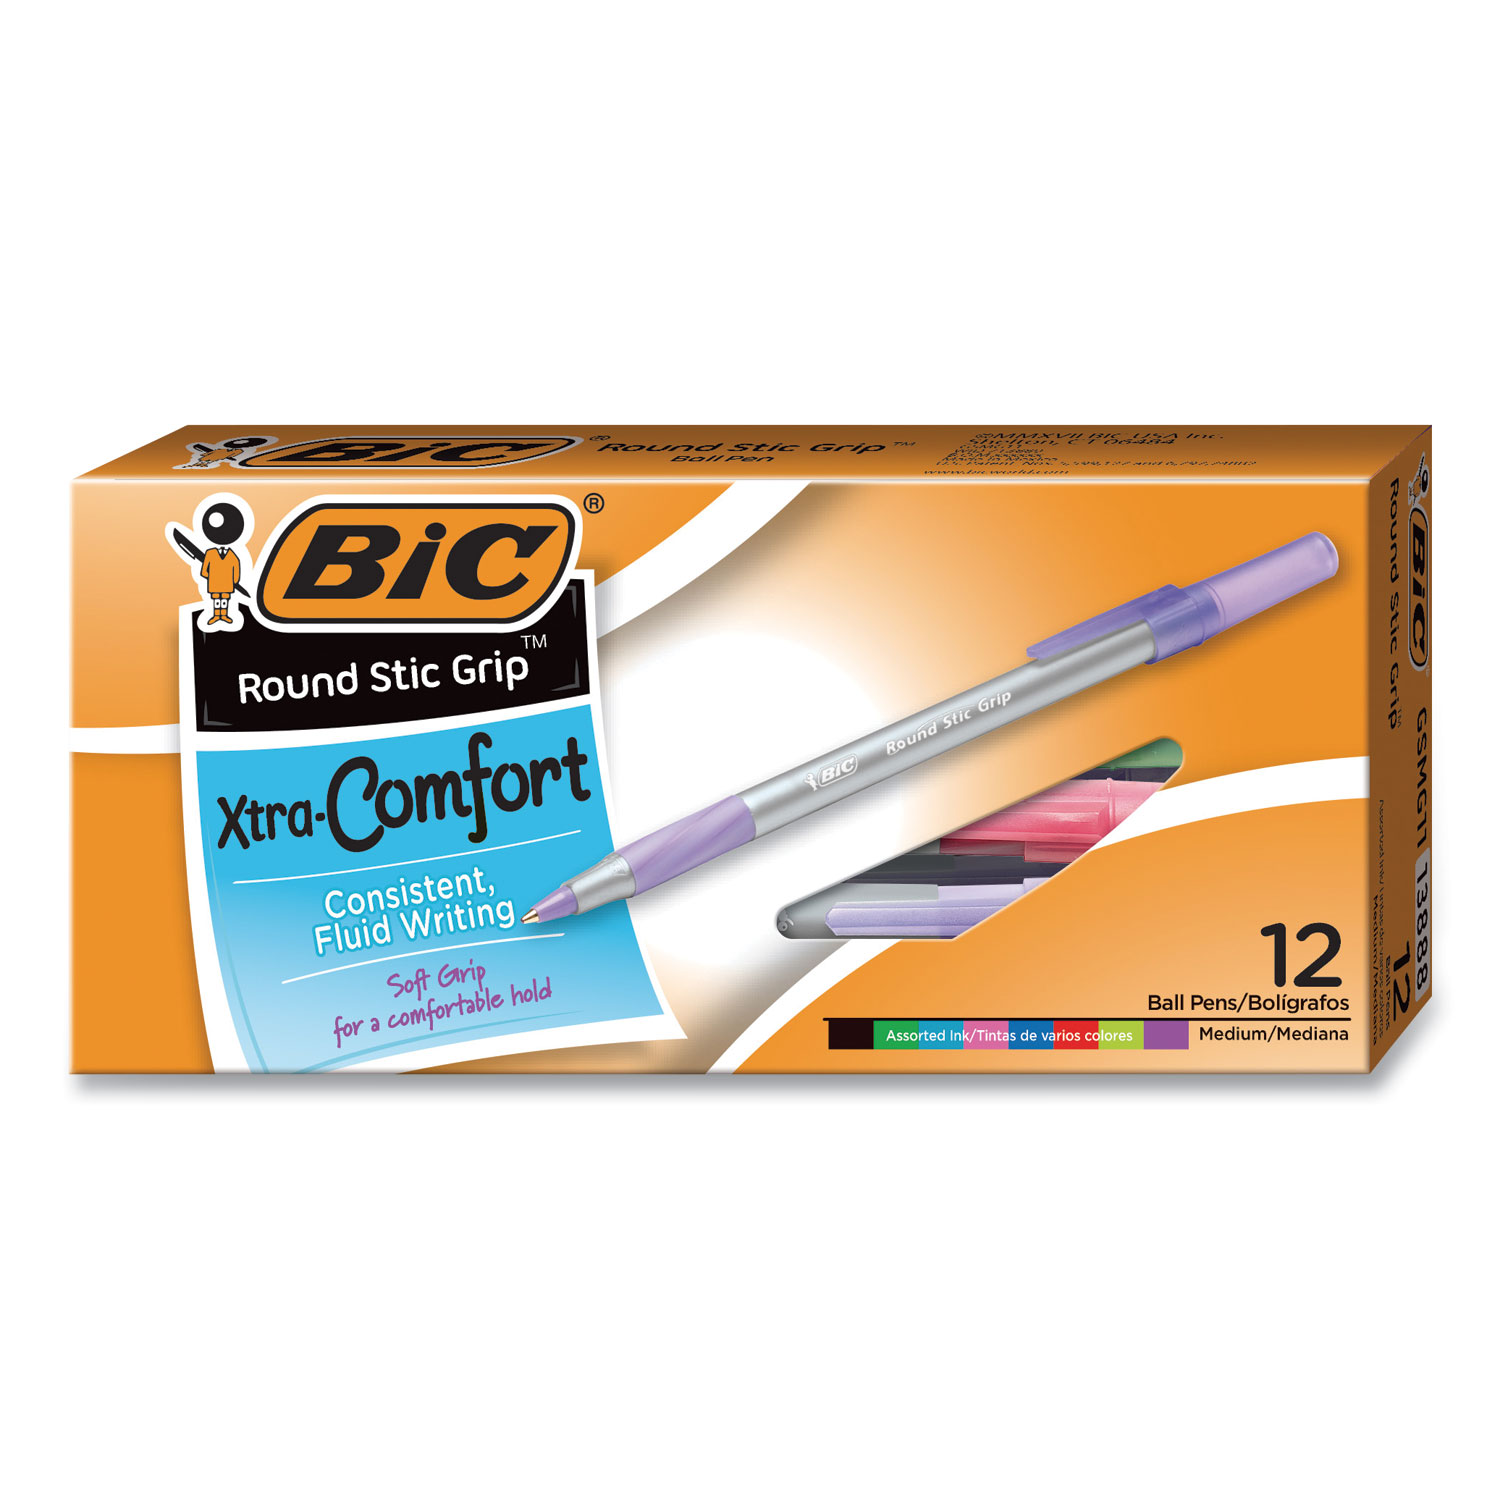 BIC® Round Stic Grip Xtra Comfort Stick Ballpoint Pen, 1mm, Assorted Fashion Inks, Translucent Barrels, Dozen